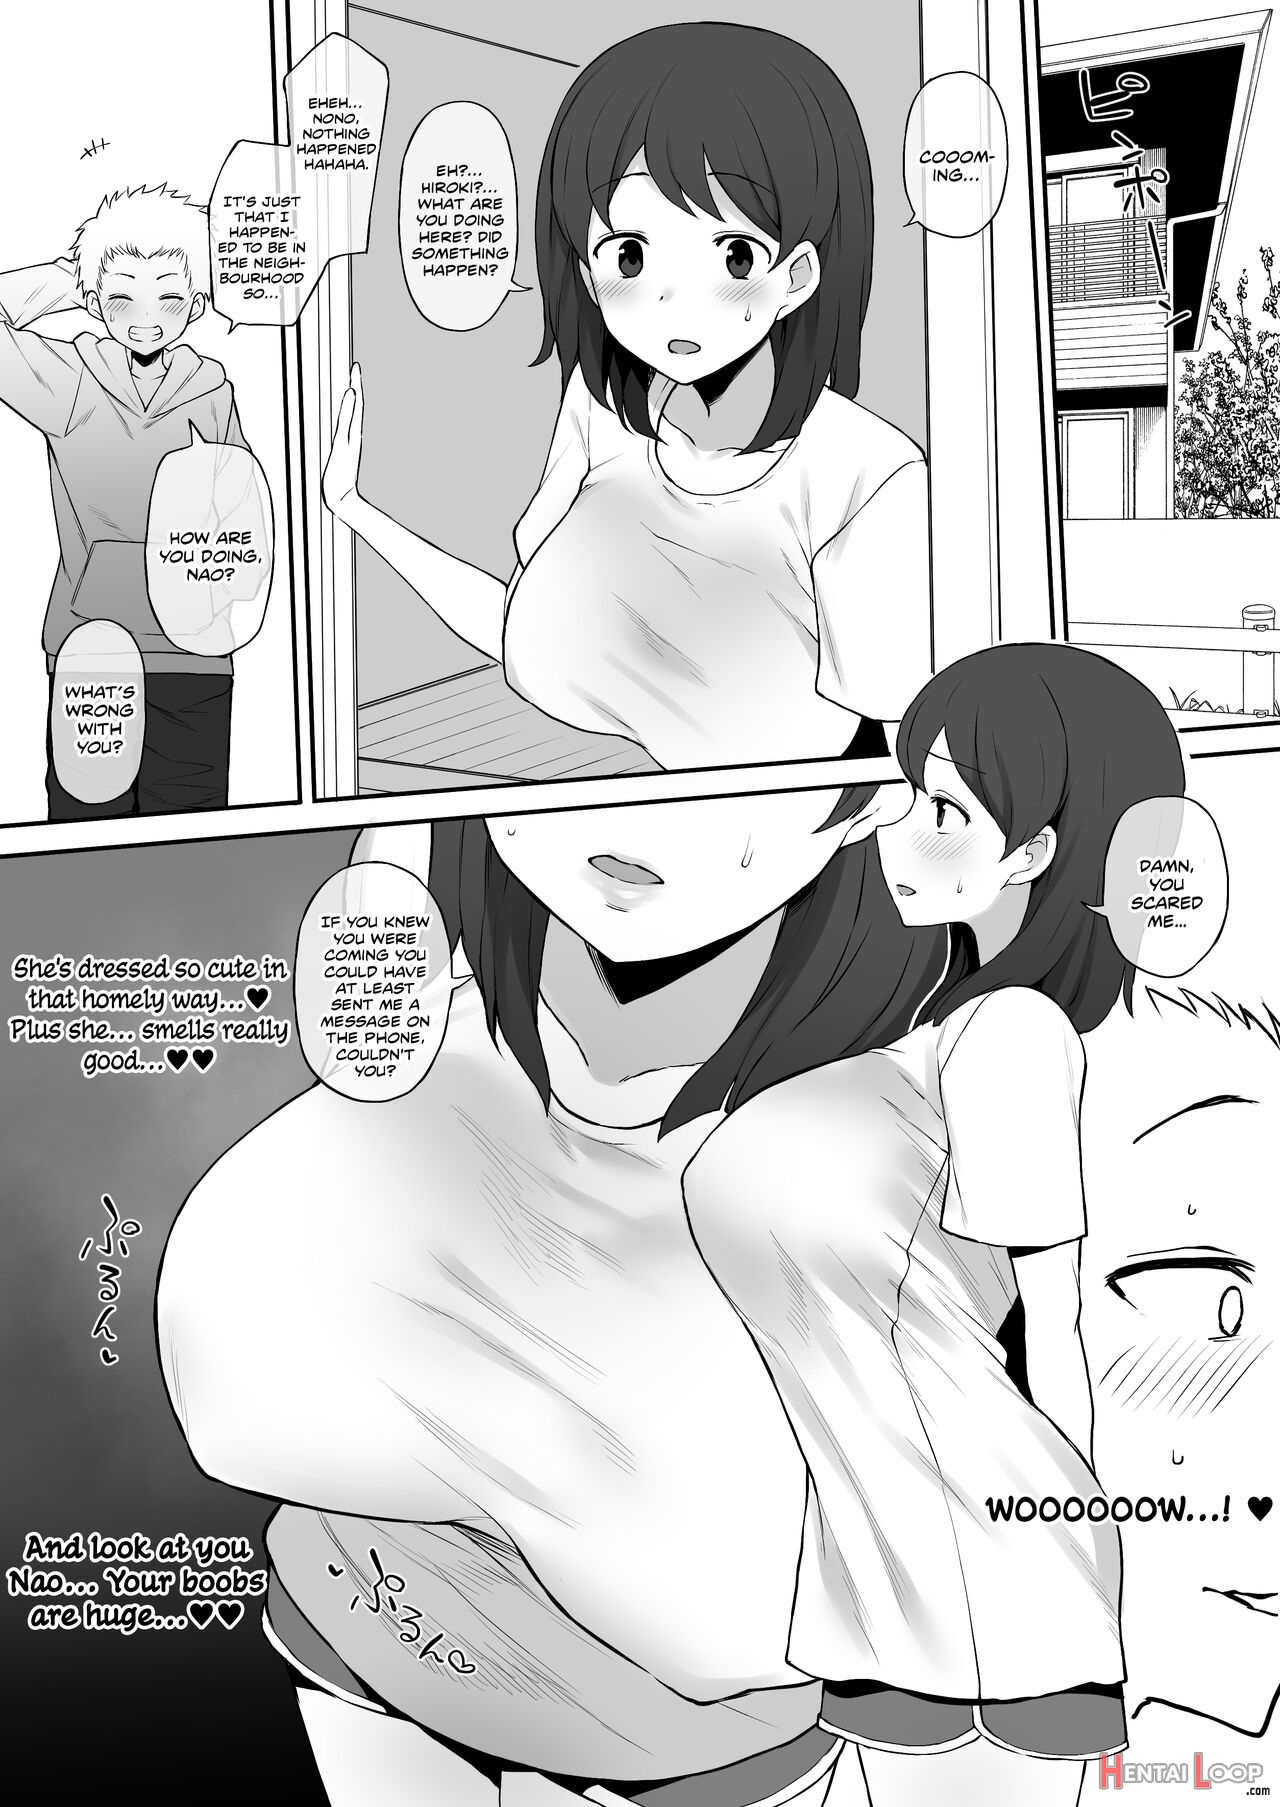 Kokujin No Tenkousei Ntr Ru Chapters 1-6 Part 1 Plus Bonus Chapter: Stolen Mother’s Breasts page 63